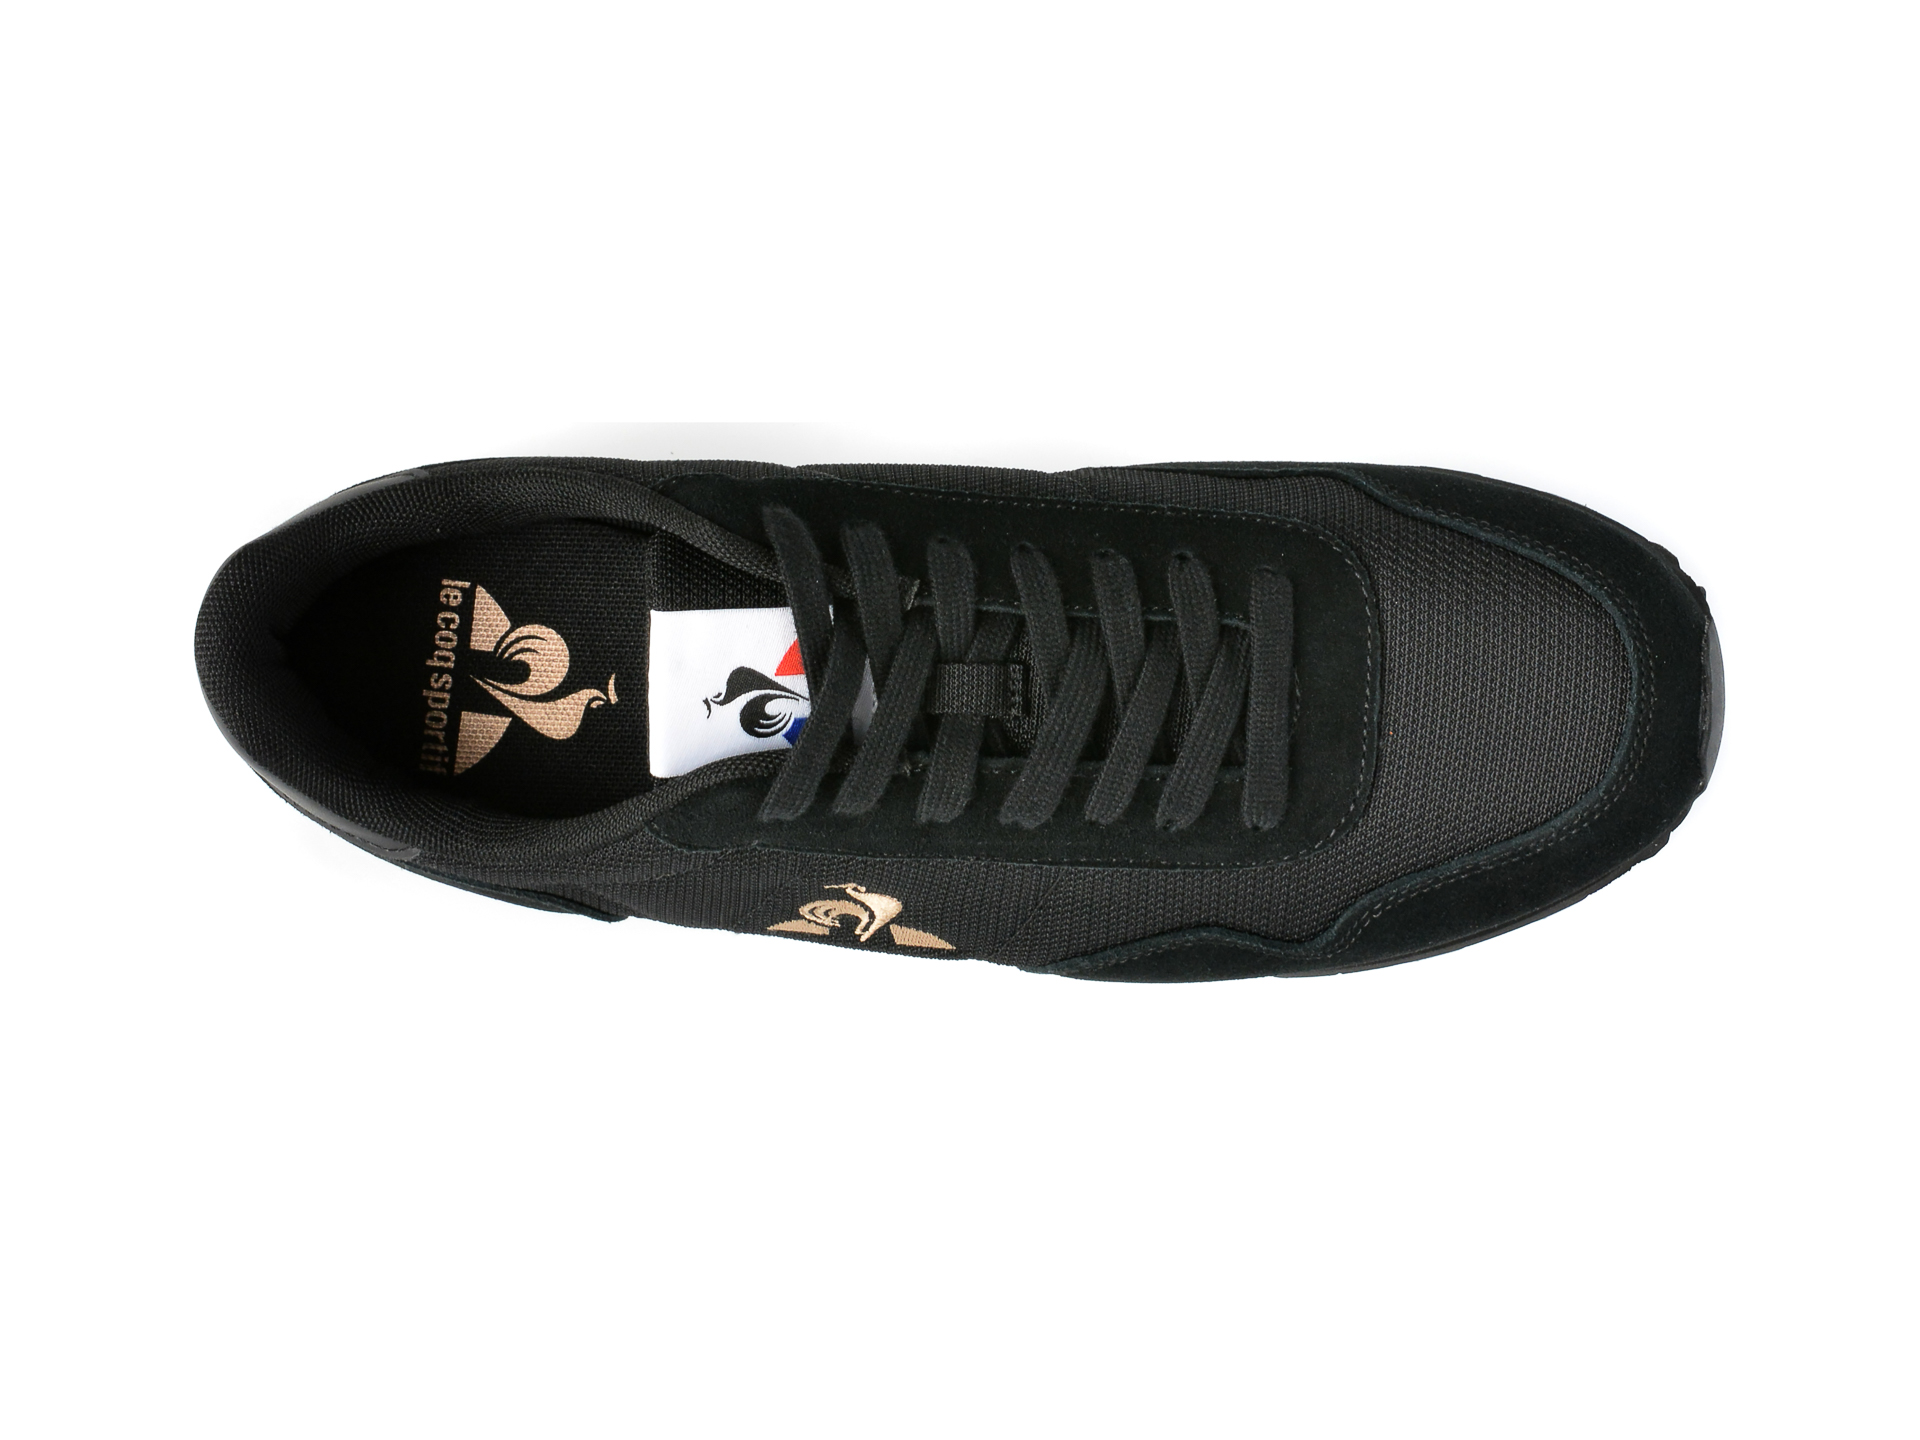 Poze Pantofi LE COQ SPORTIF negri, 2310305, din material textil si piele intoarsa otter.ro